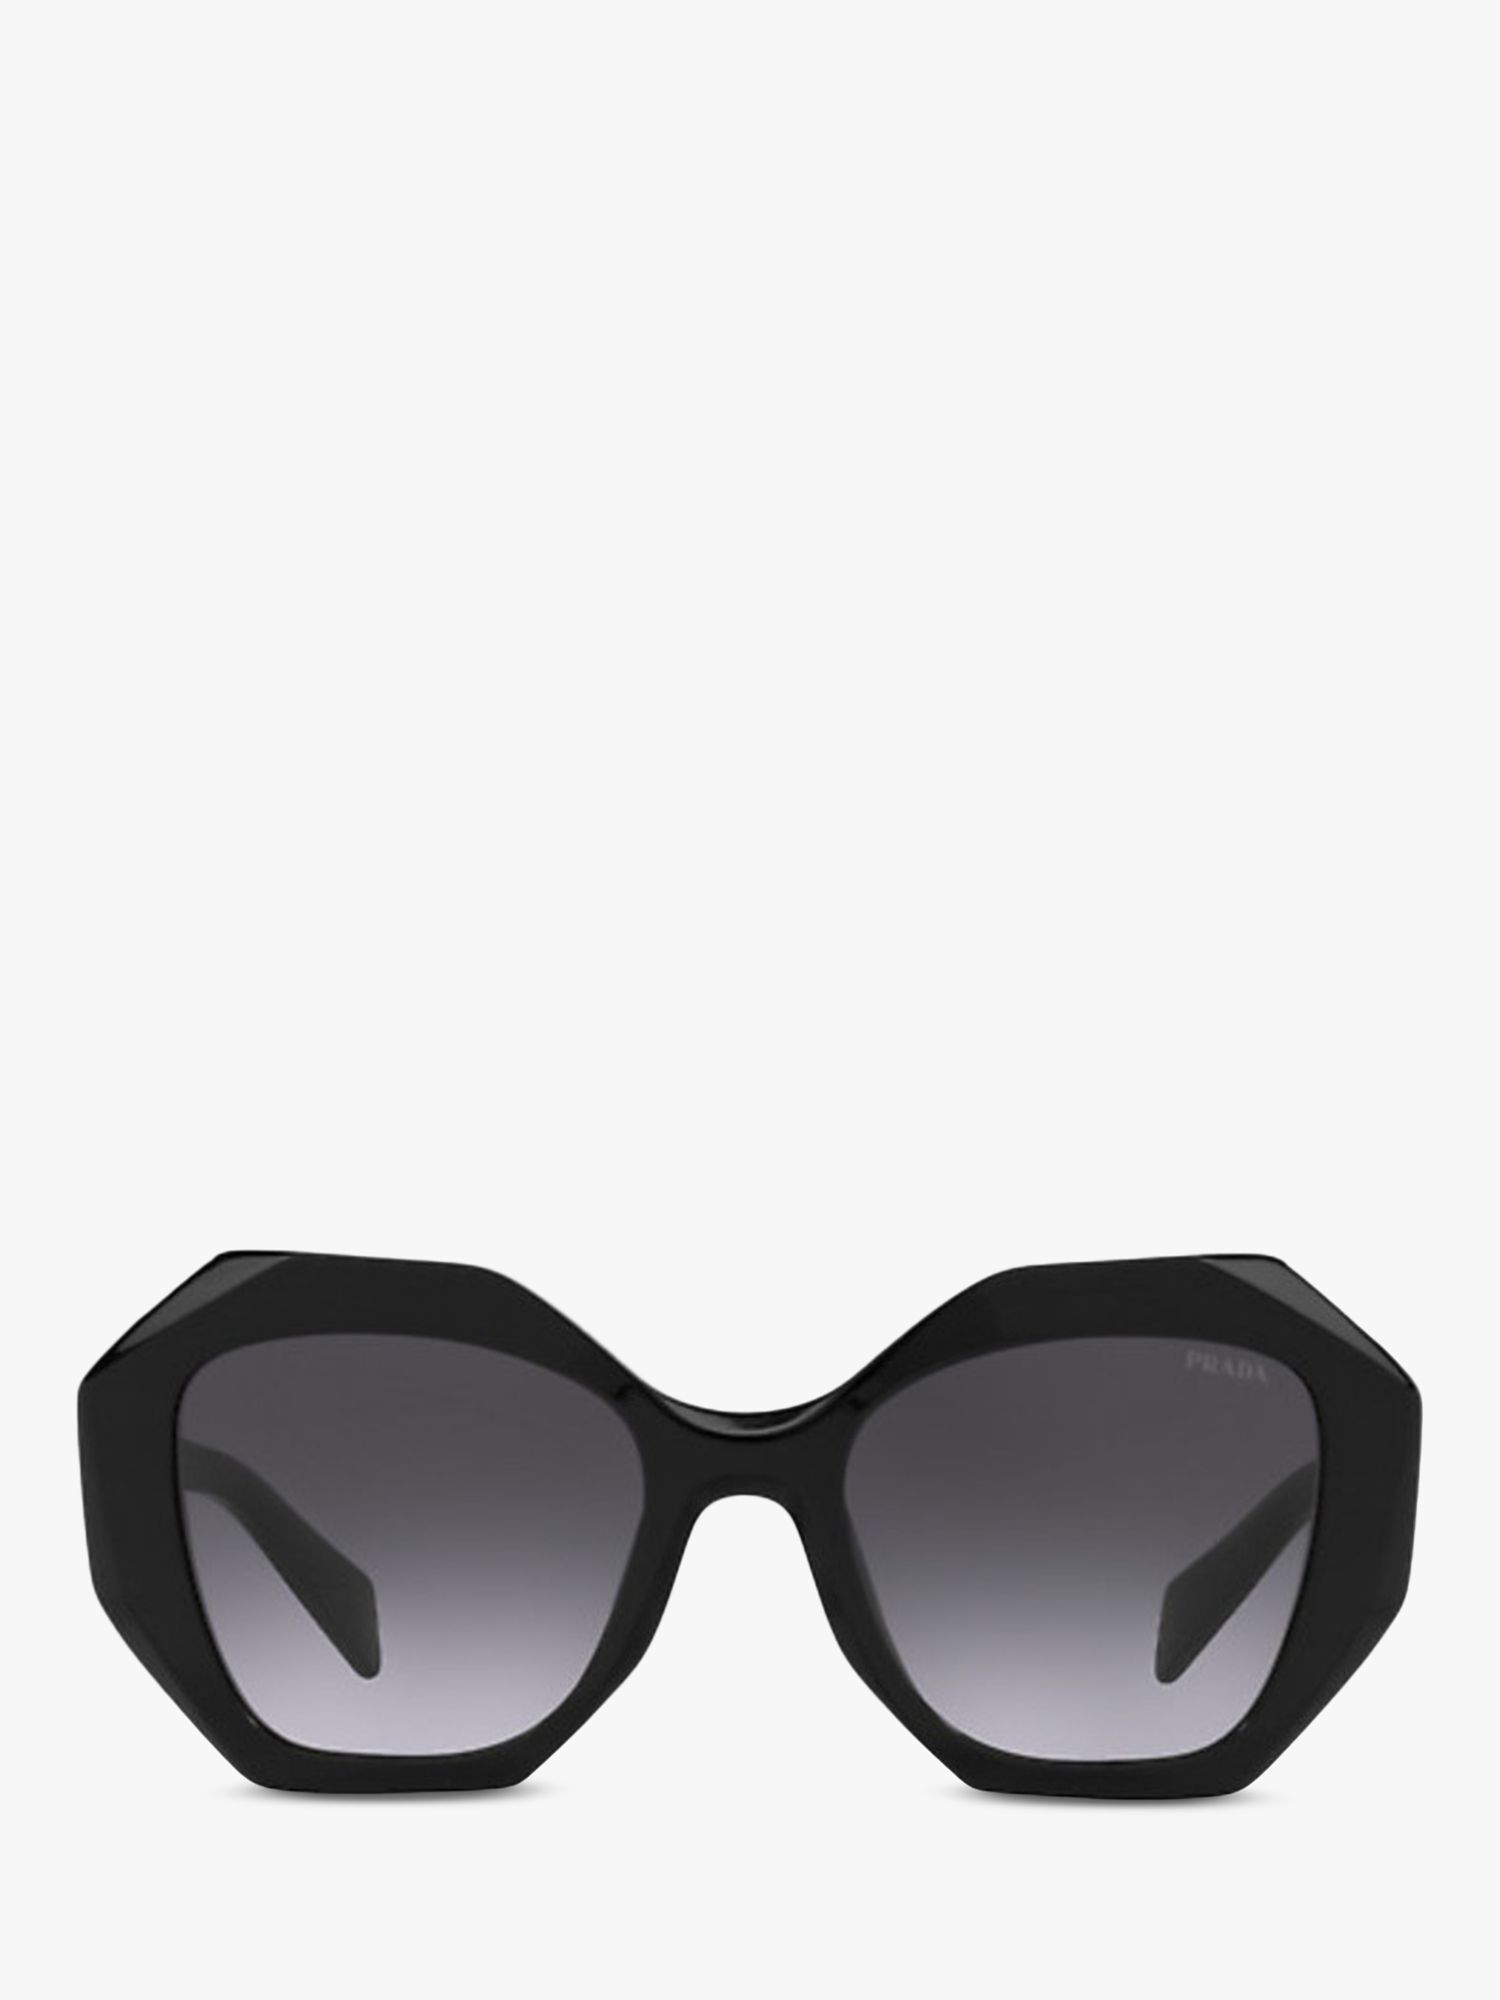 Buy Prada PR 16WS Women's Irregular Shaped Sunglasses Online at johnlewis.com